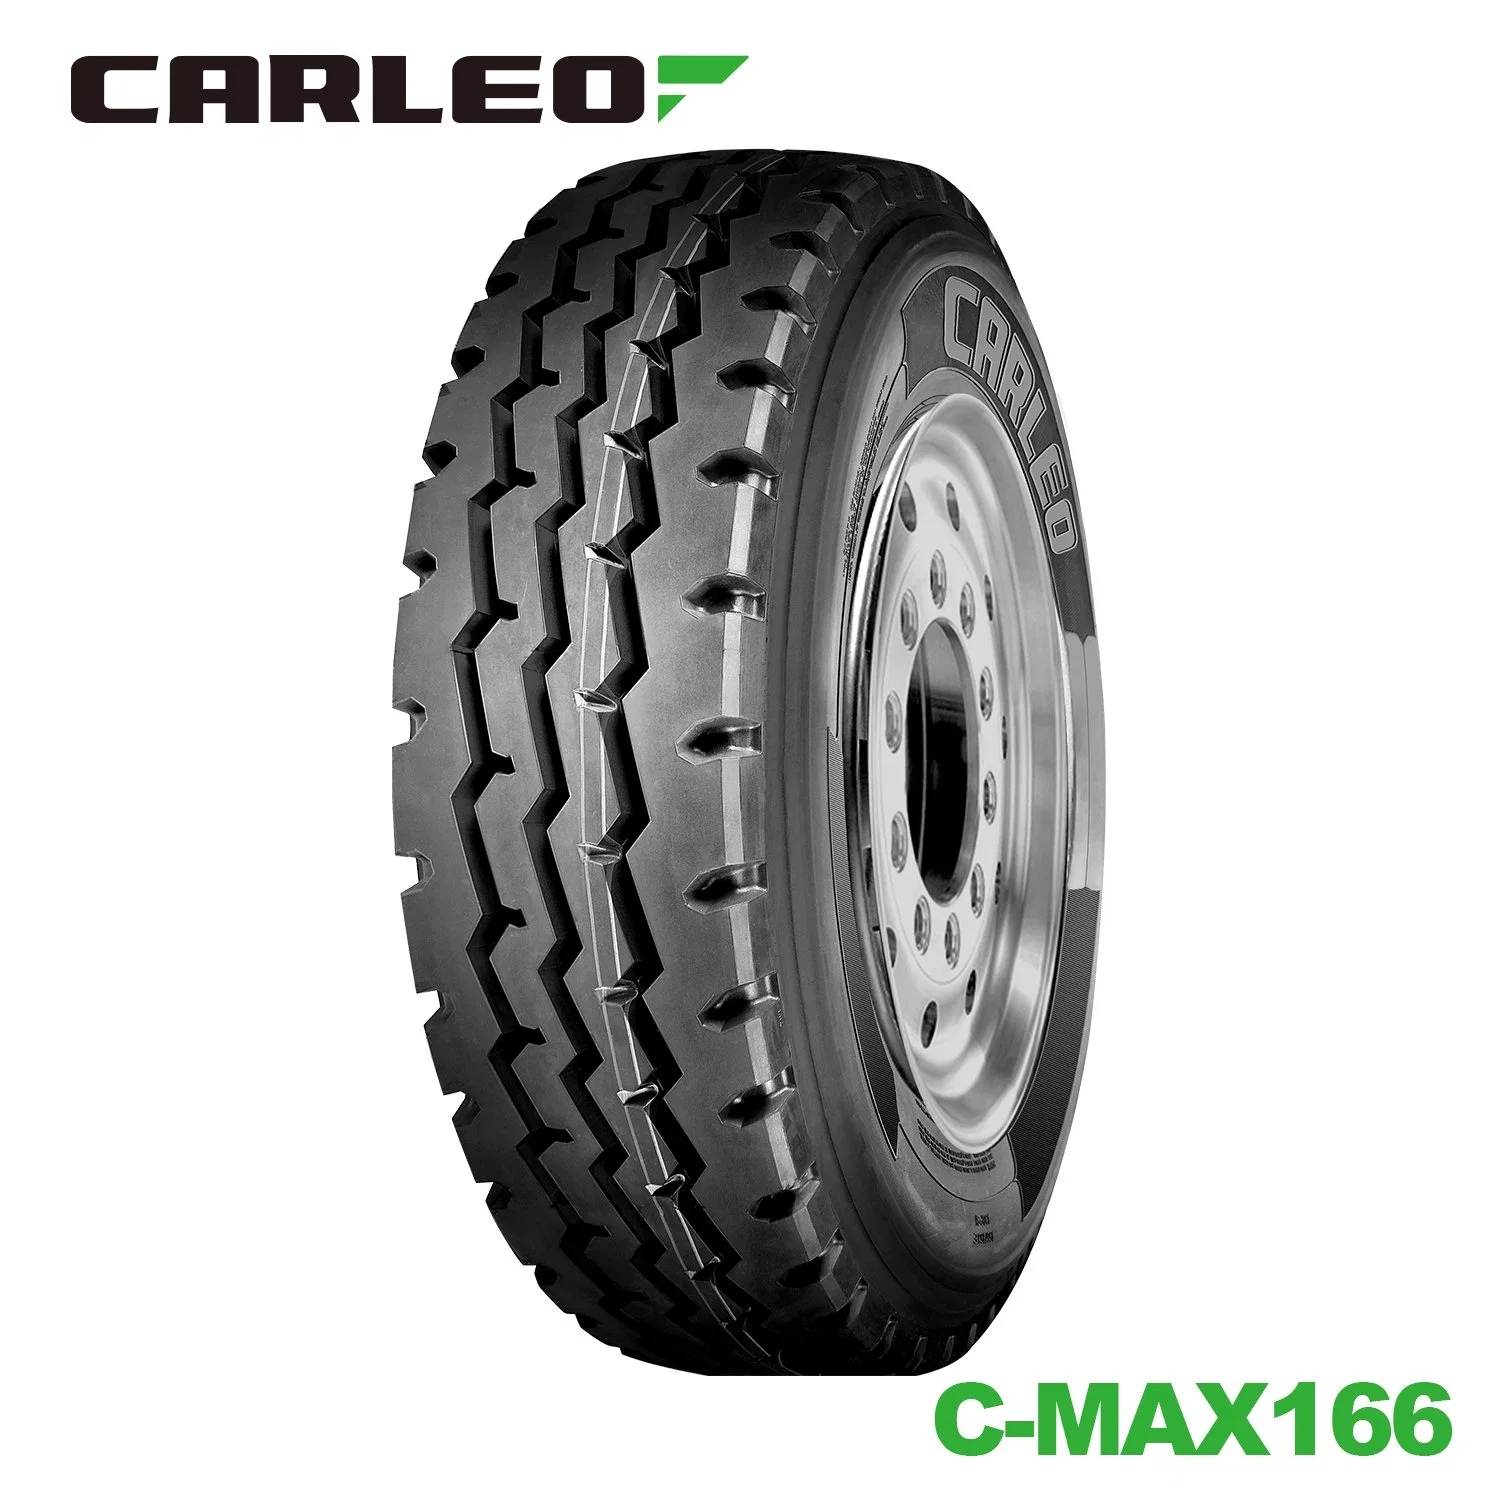 Carleo Marke LKW-Reifen 8.25r20